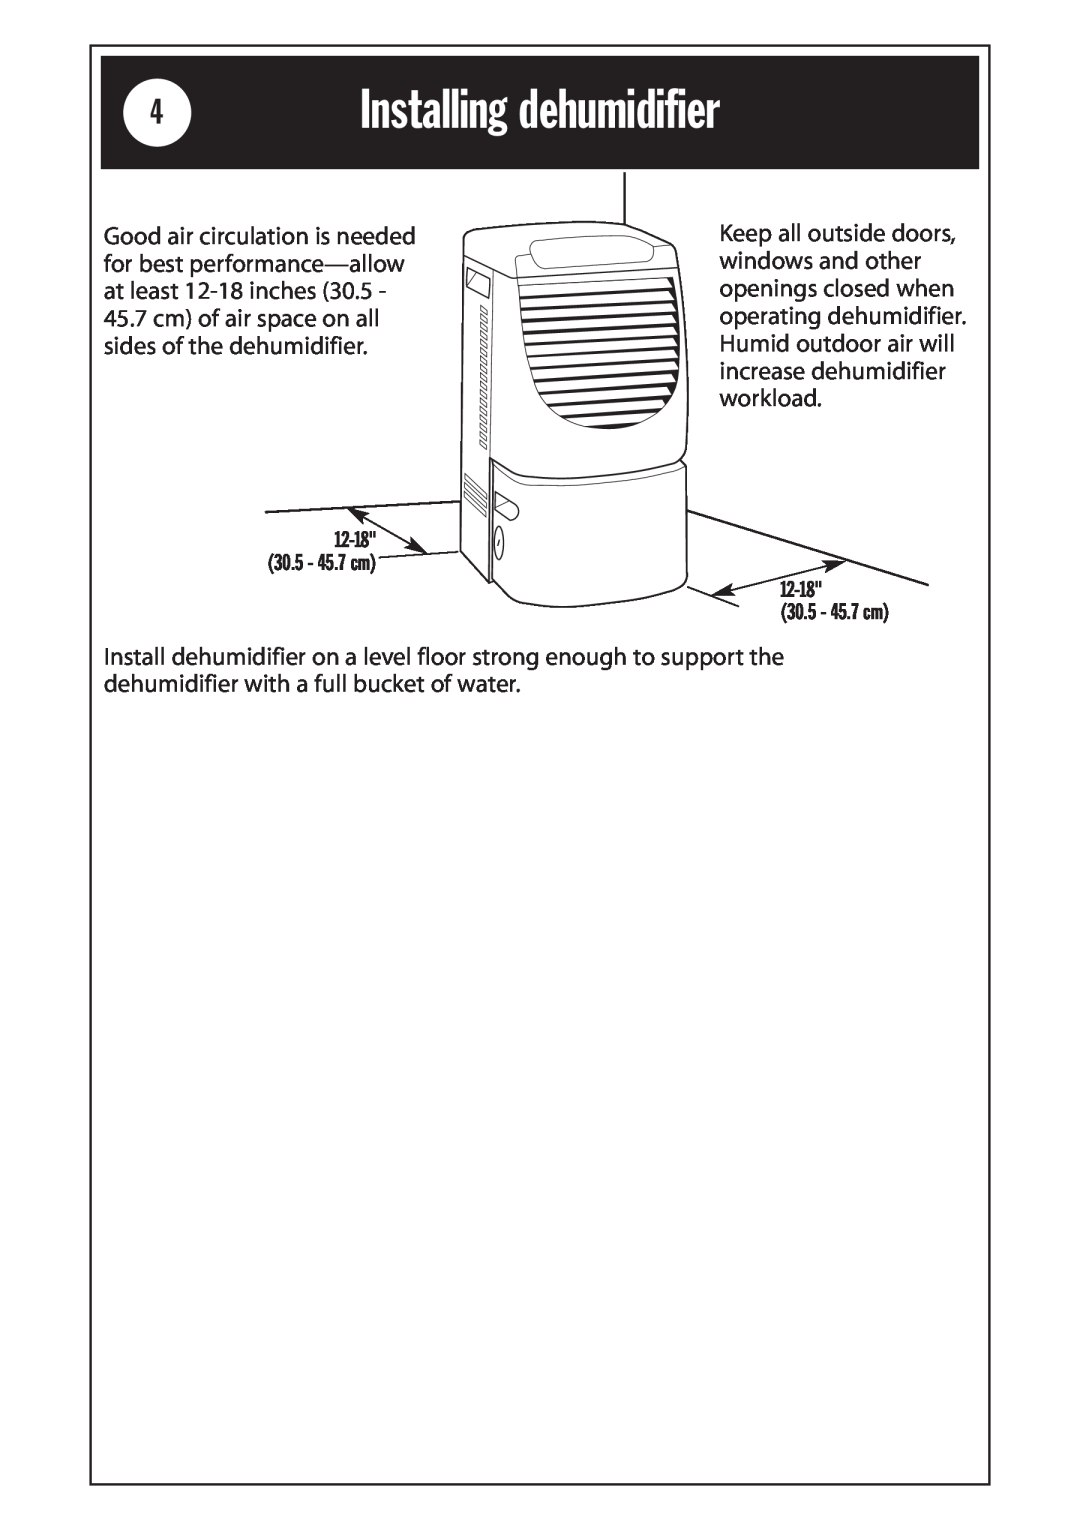 Whirlpool 1185020 manual 4InstallingSafetyinformationdehumidifier, 12-18 30.5 - 45.7 cm 